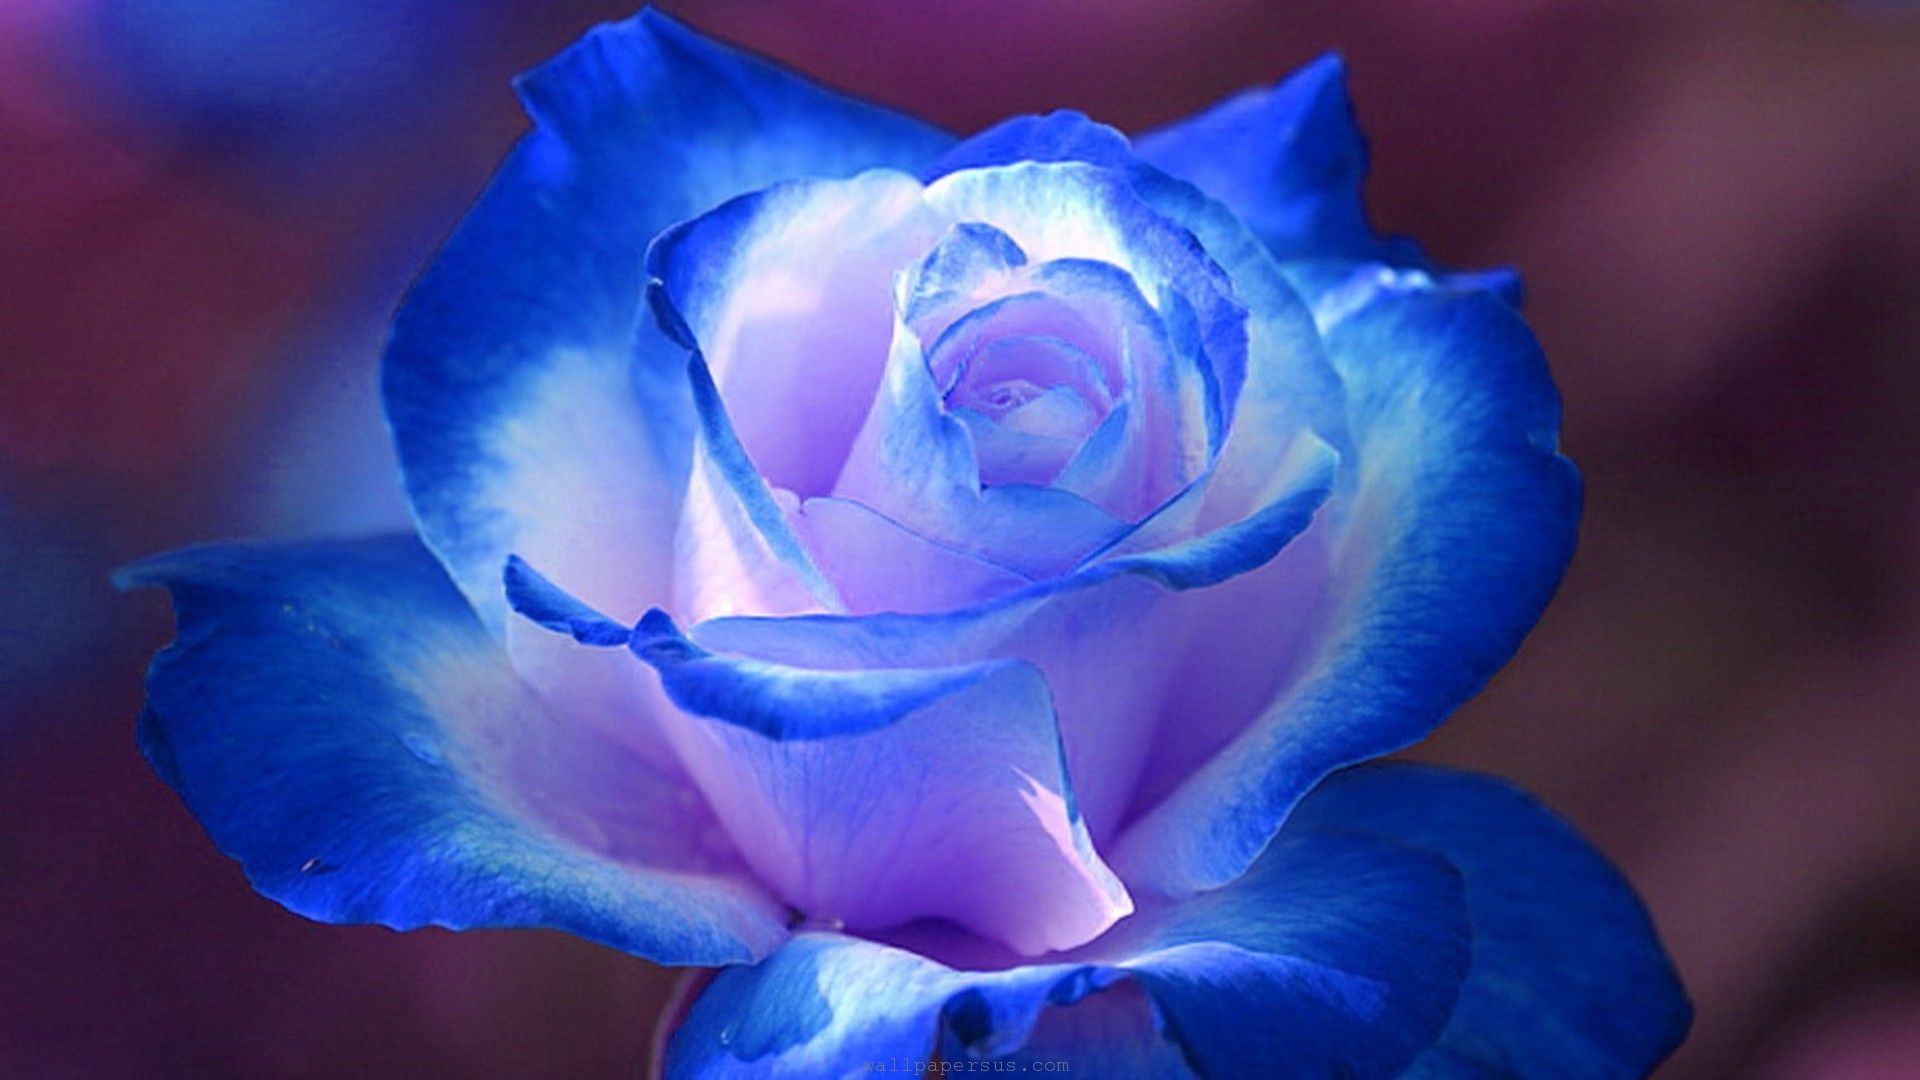 Blue Rose Wallpaper HD